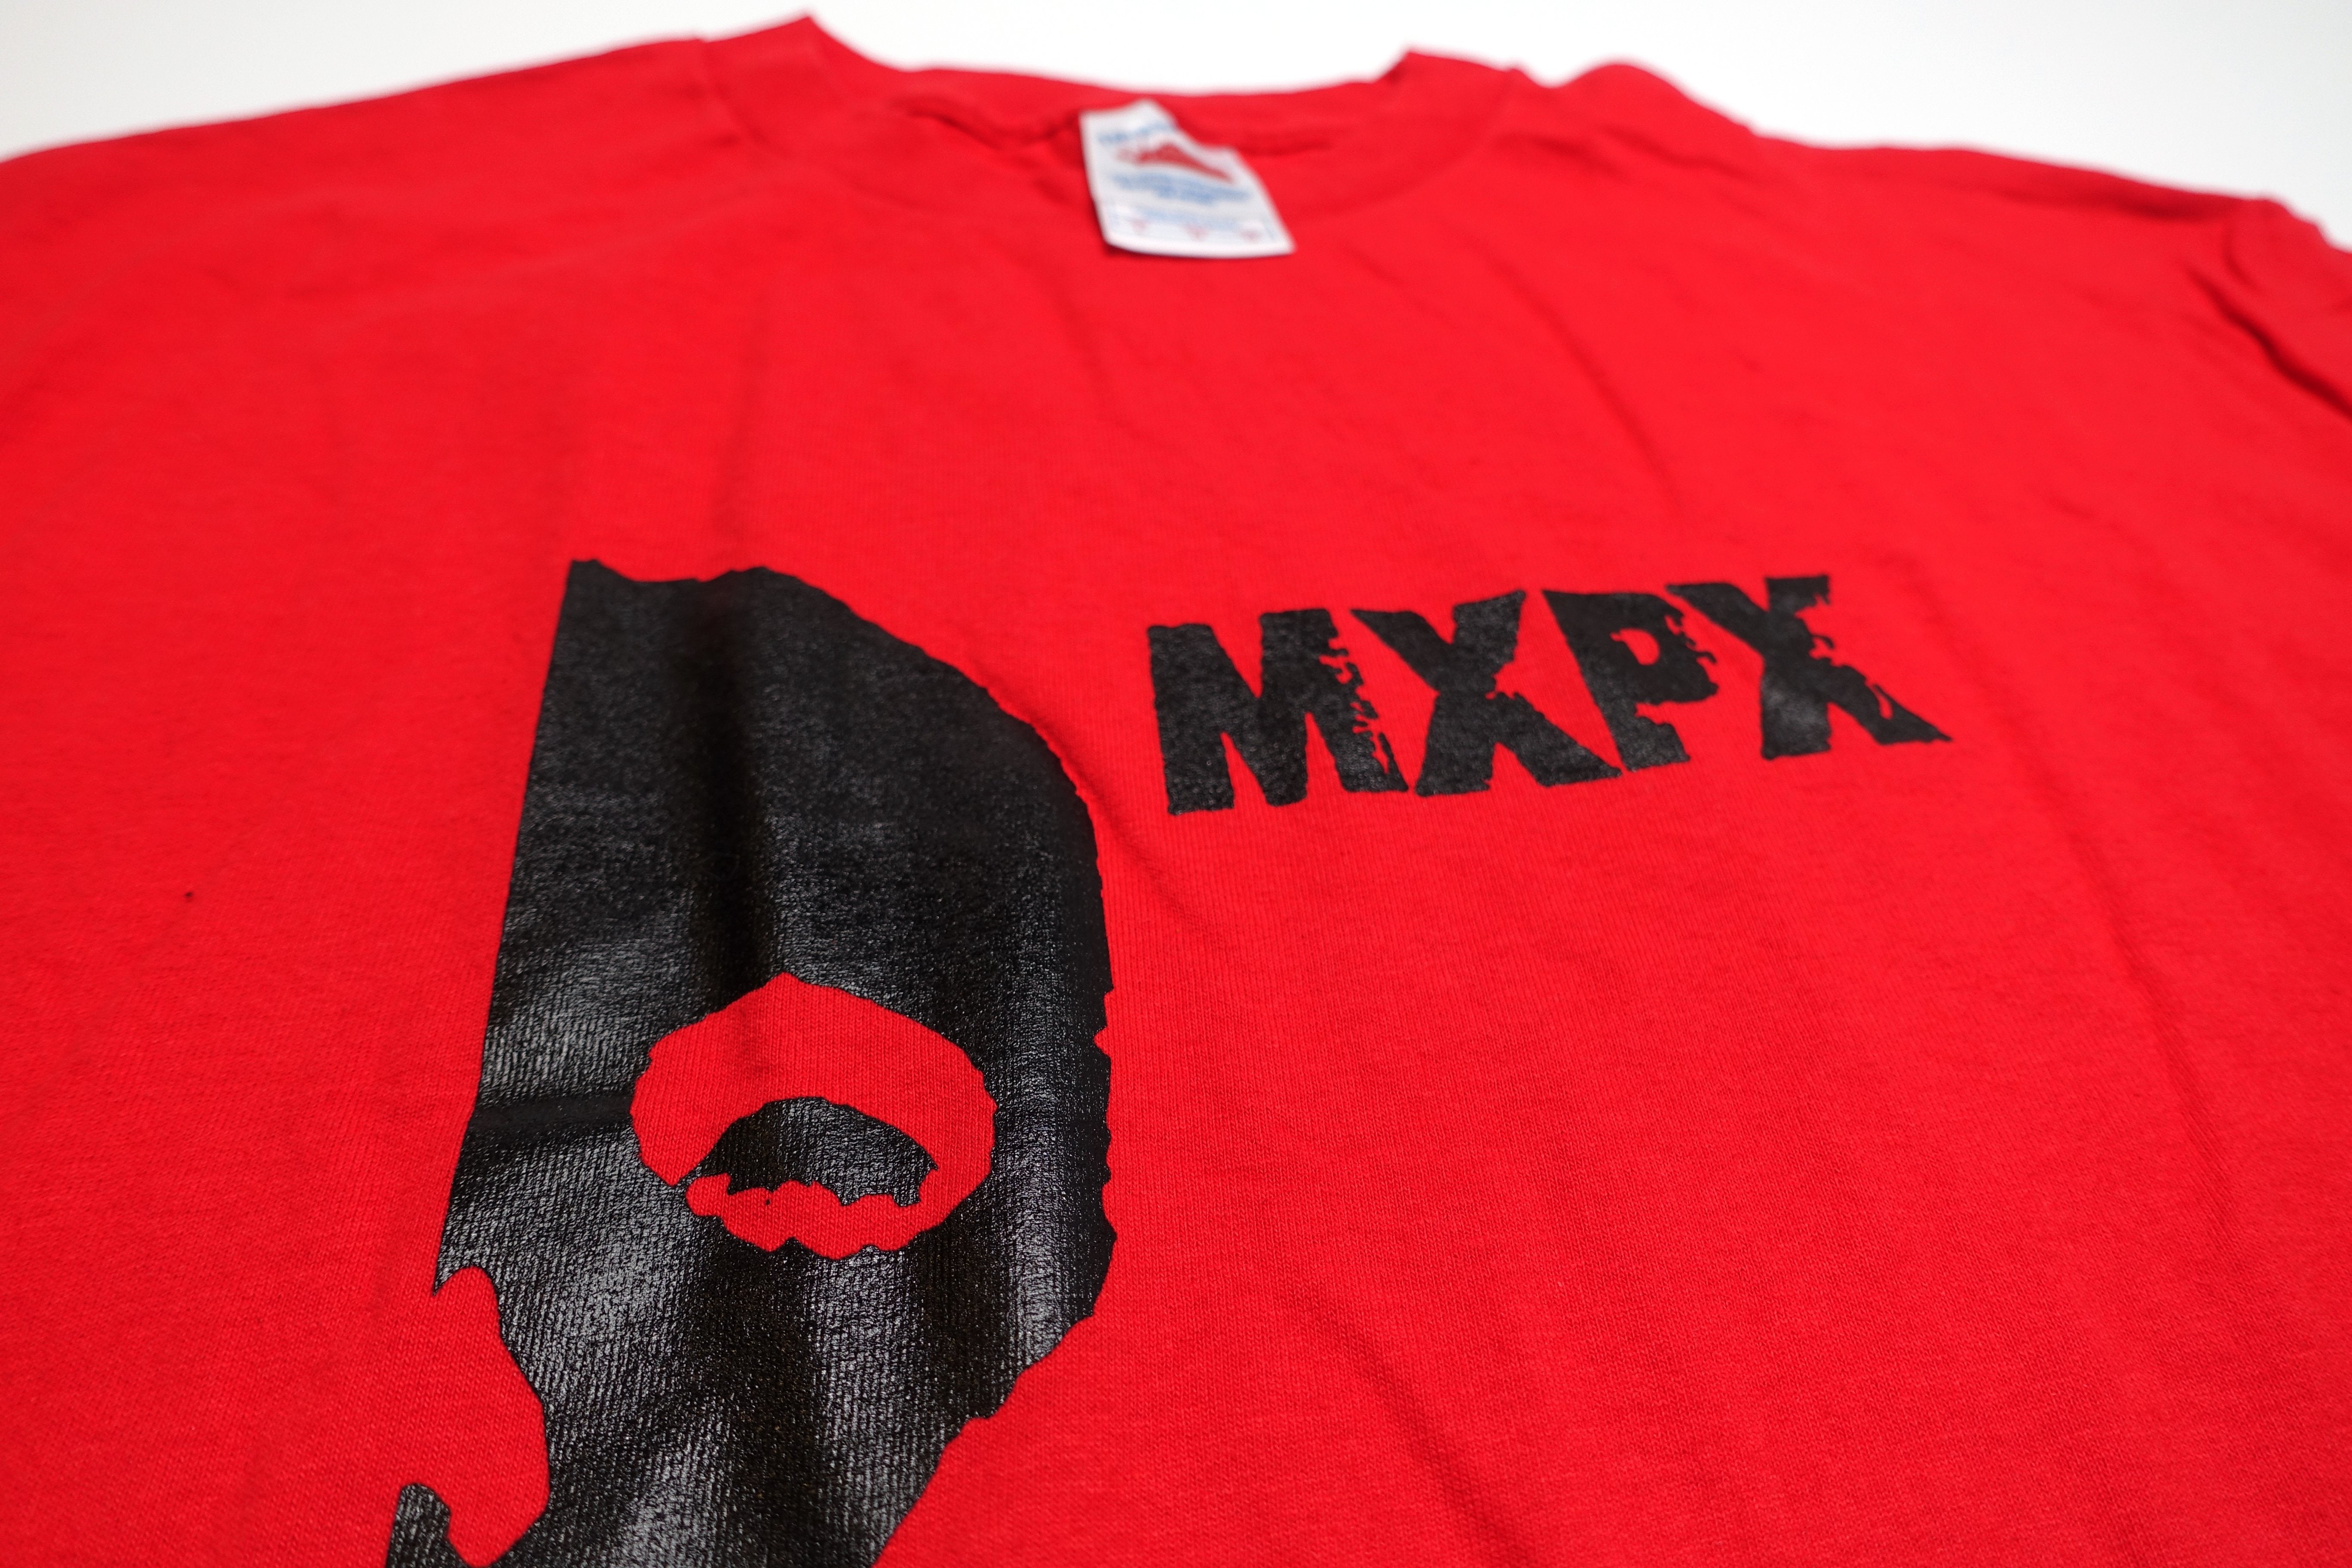 MxPx ‎– Skull Face 90's Tour Shirt Size Large